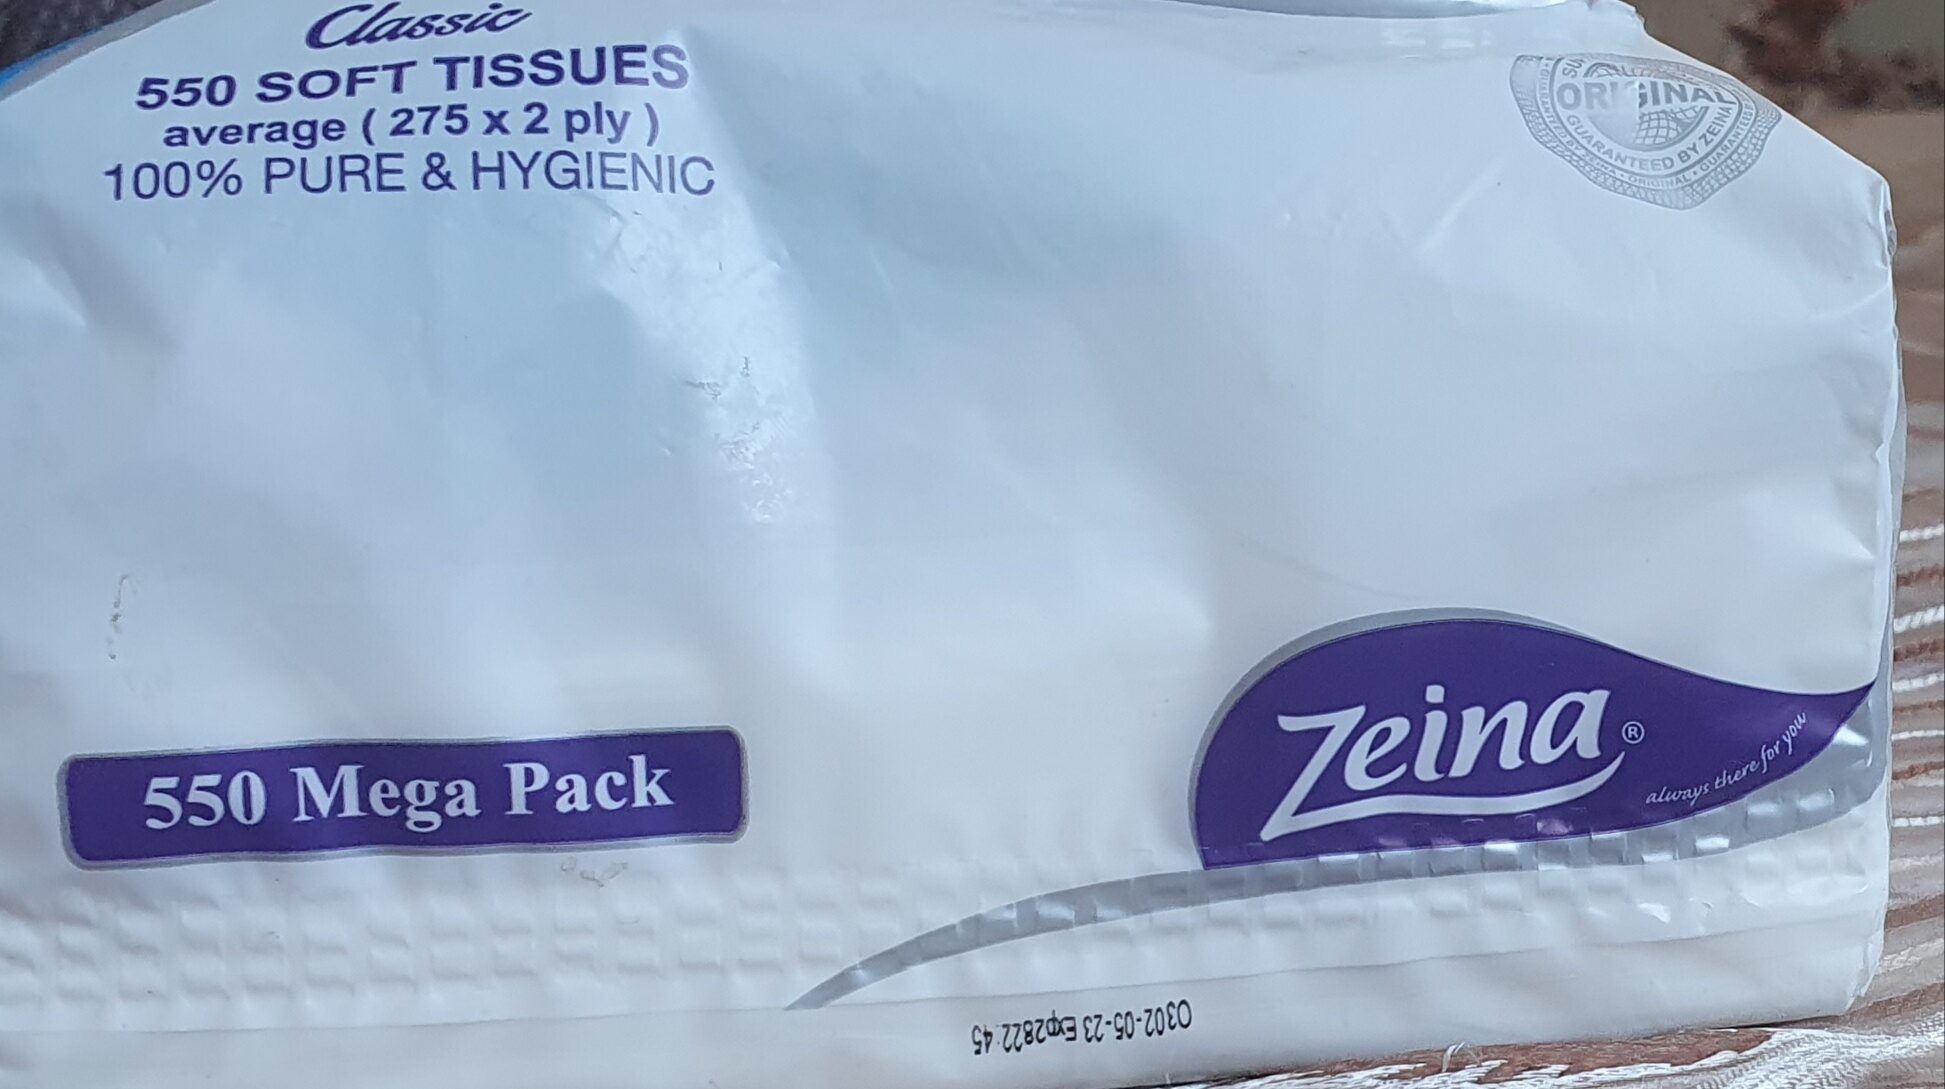 classic soft tissues - Product - en